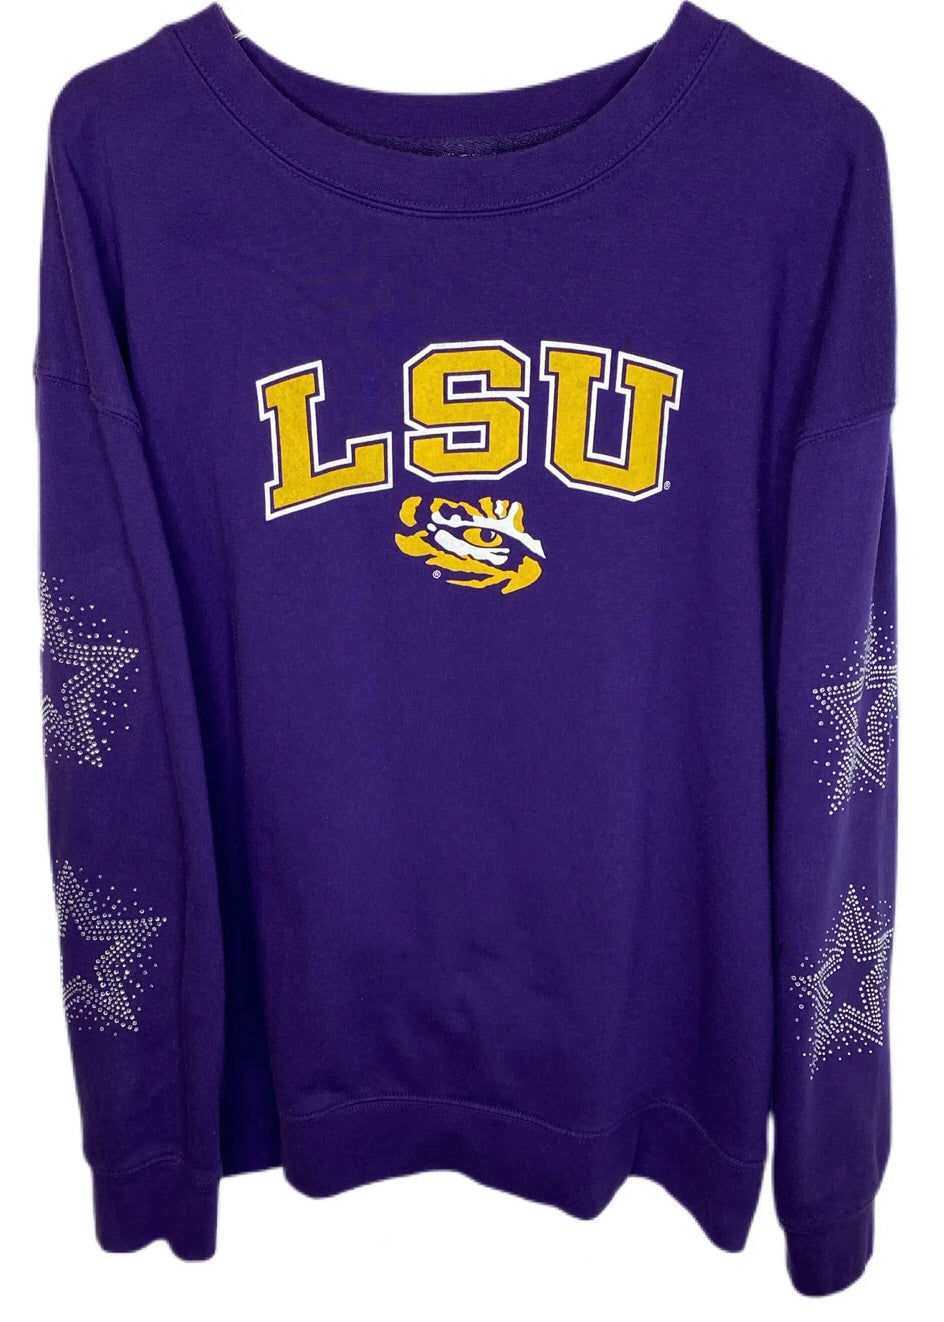 Louisiana State University, LSU Tigers One of a KIND Vintage Sweatshirt with Crystal Starburst Design